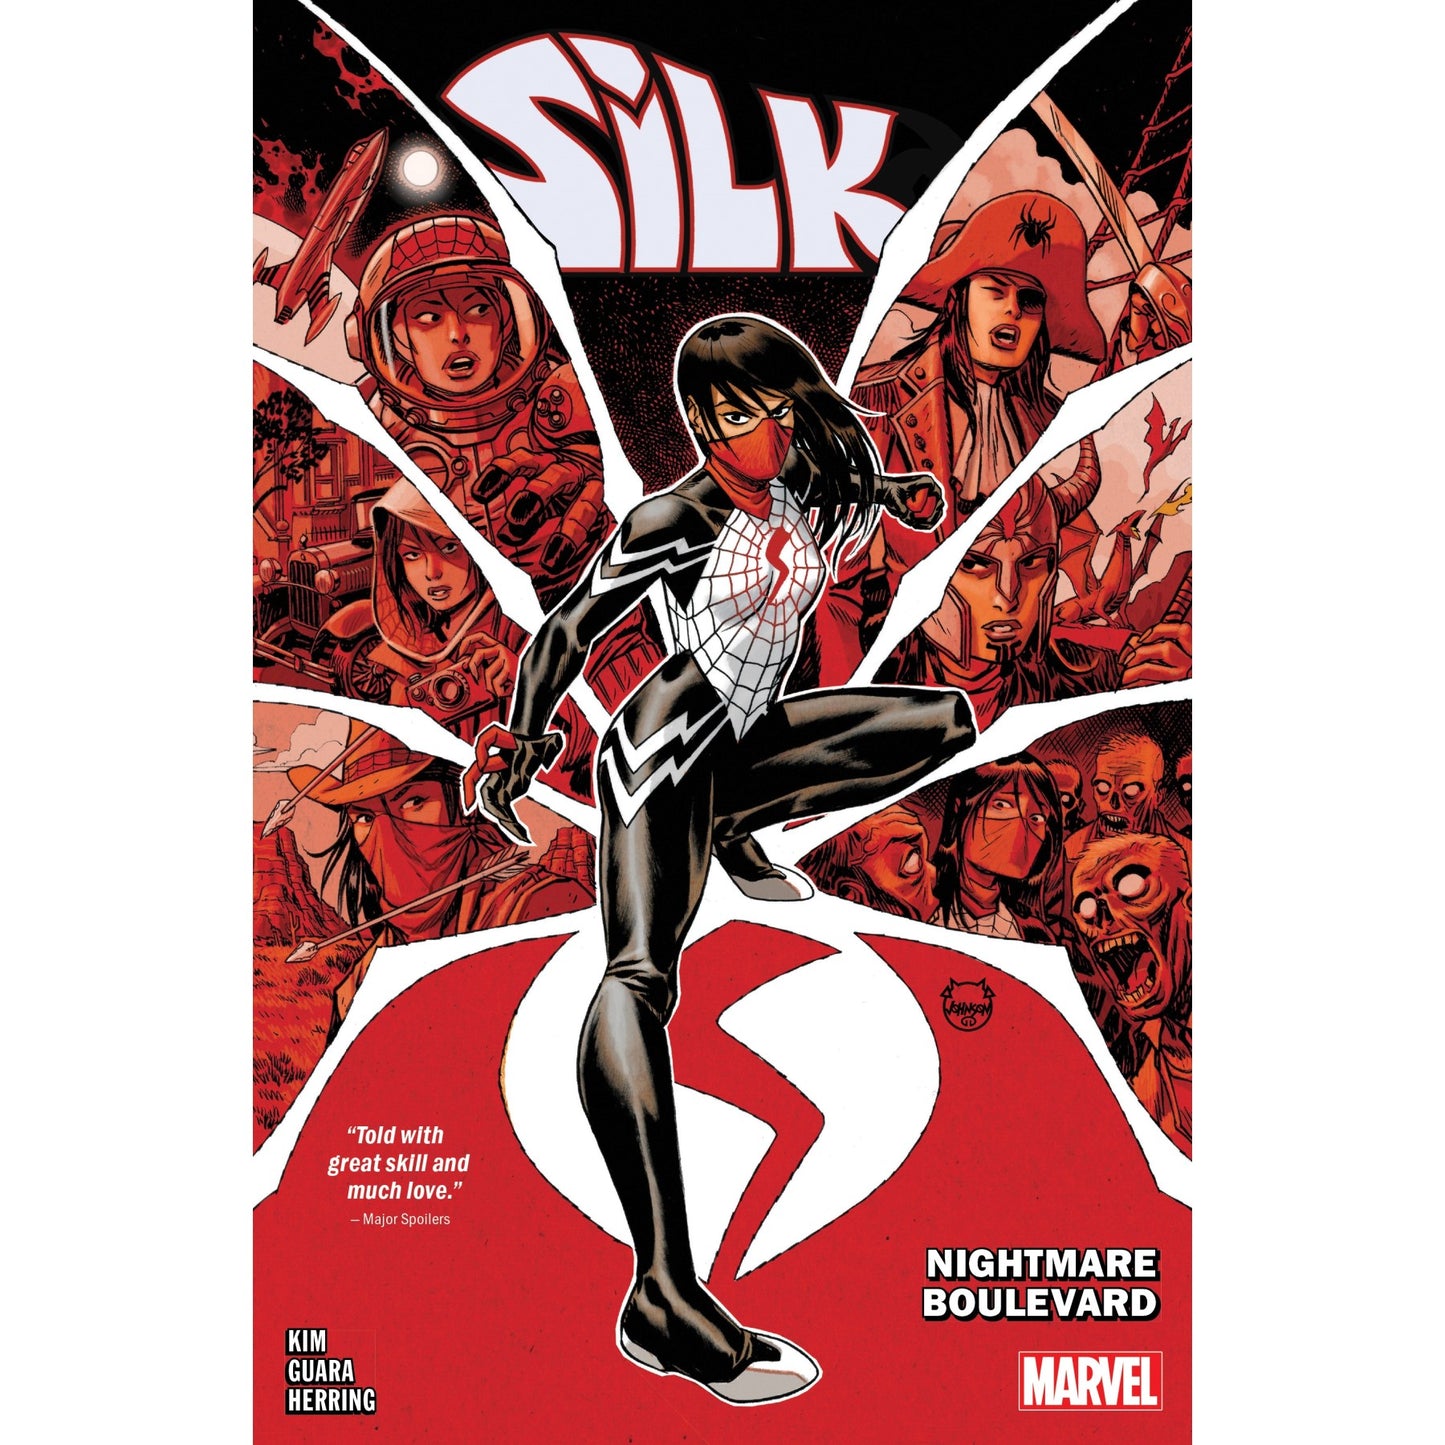 Silk Vol. 3 Nightmare Boulevard